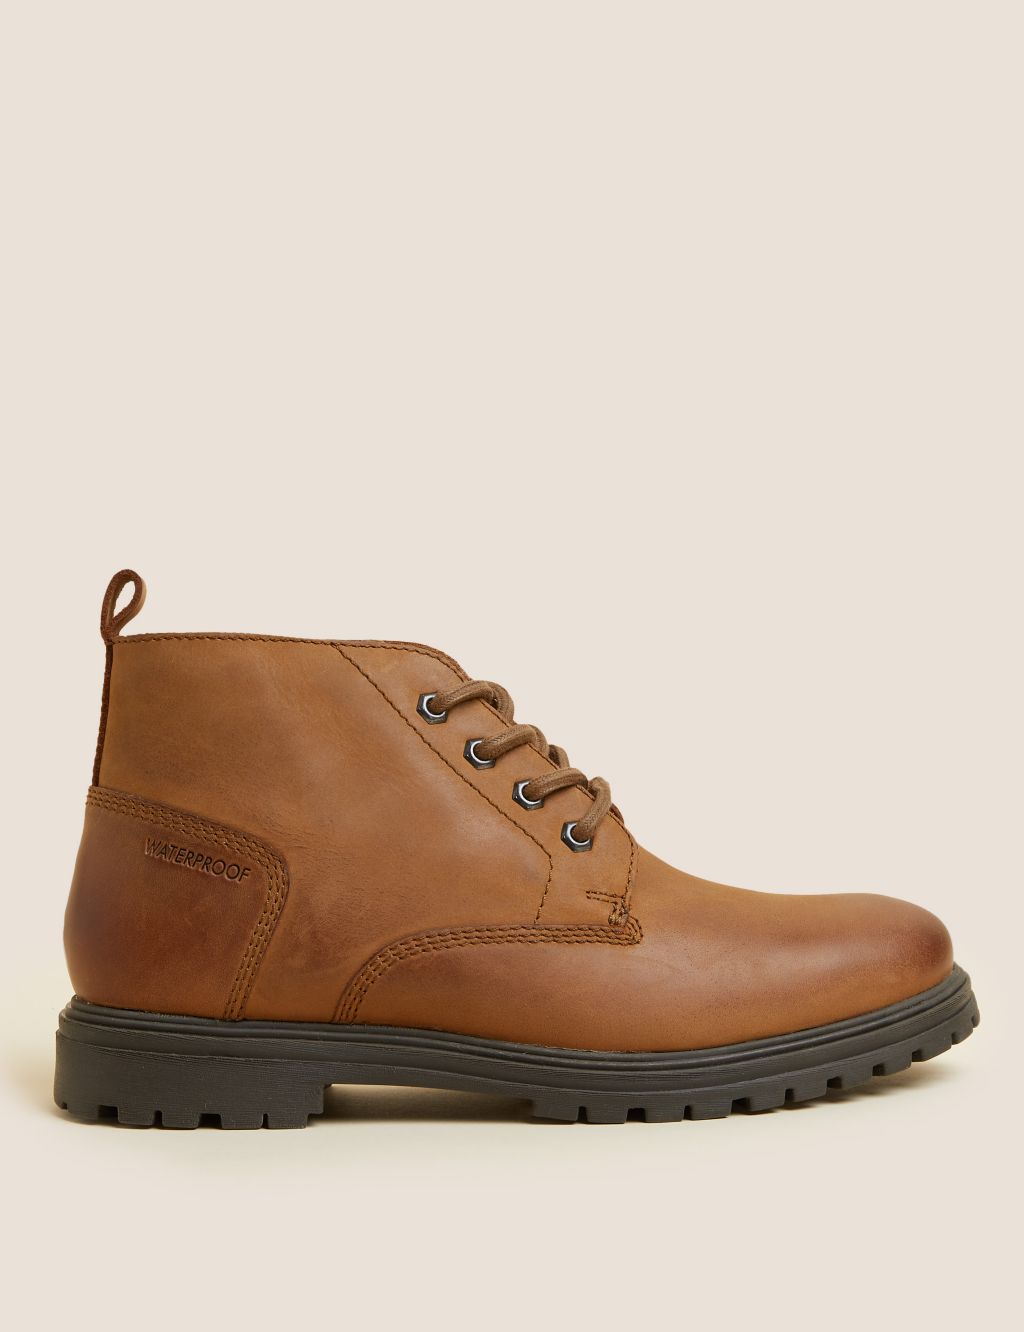 Leather Waterproof Chukka Boots image 1